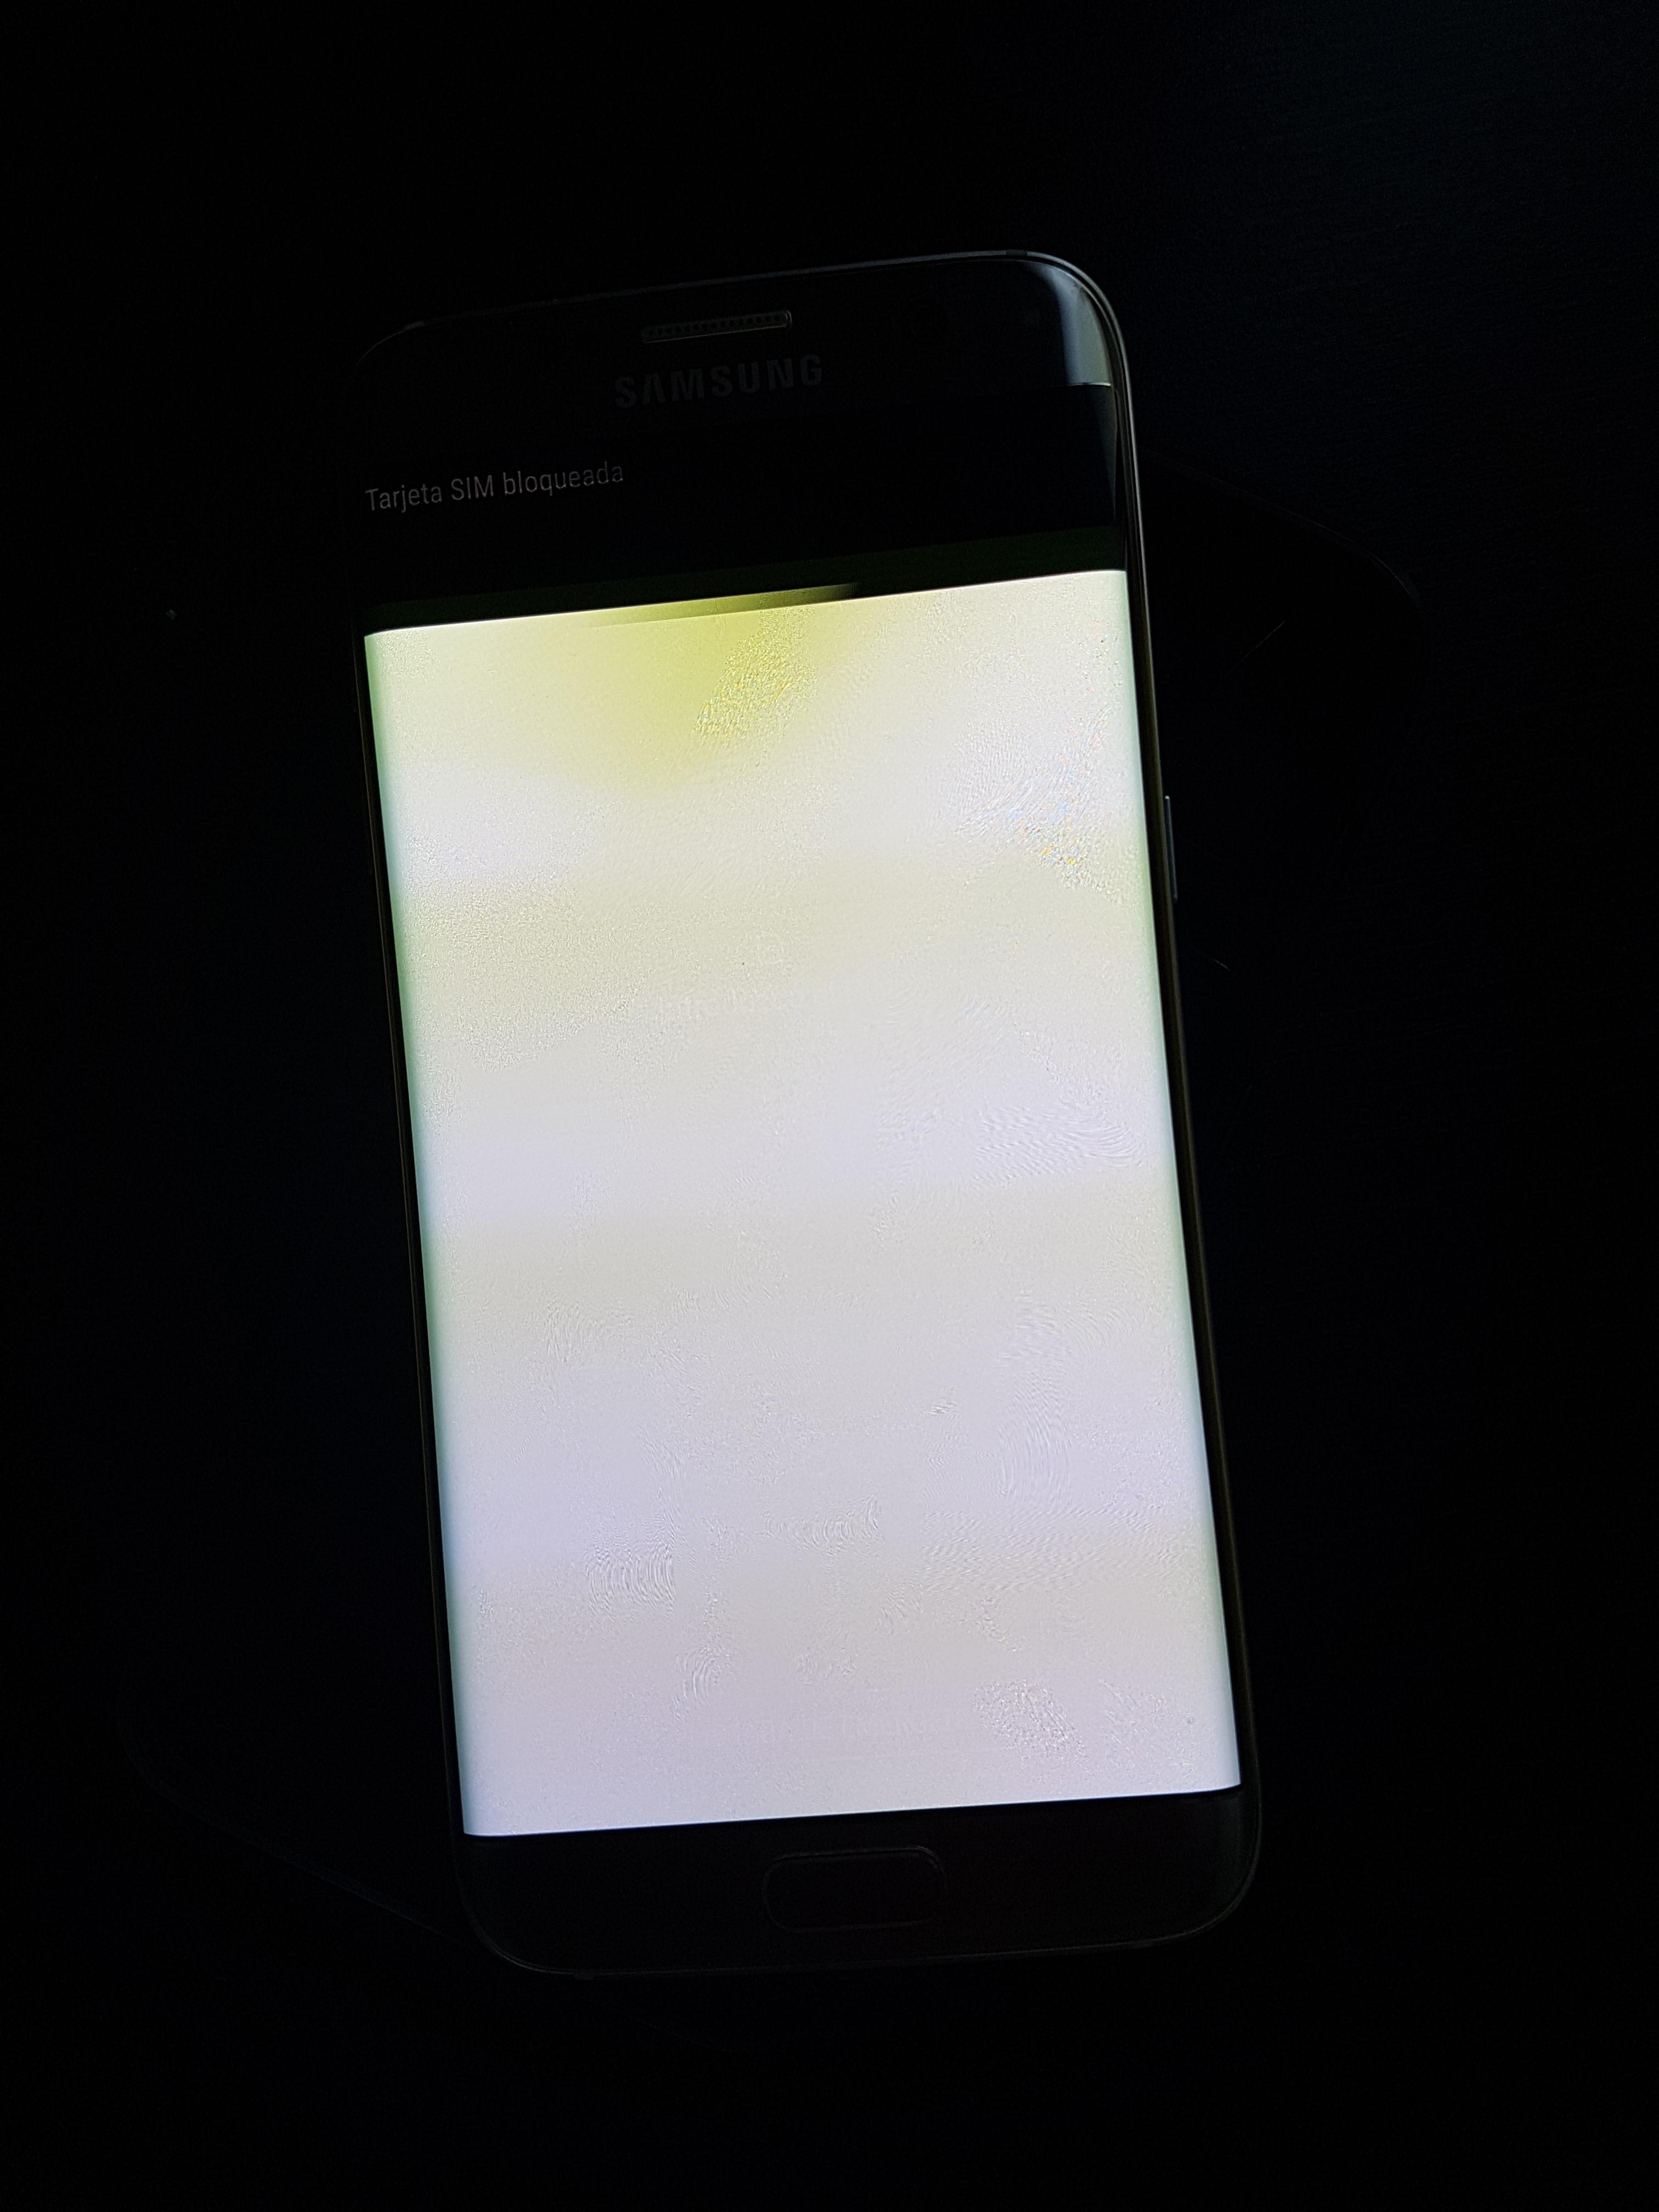 Solucionado: Falla pantalla del Samsung Galaxy S7 Edge - Samsung Community